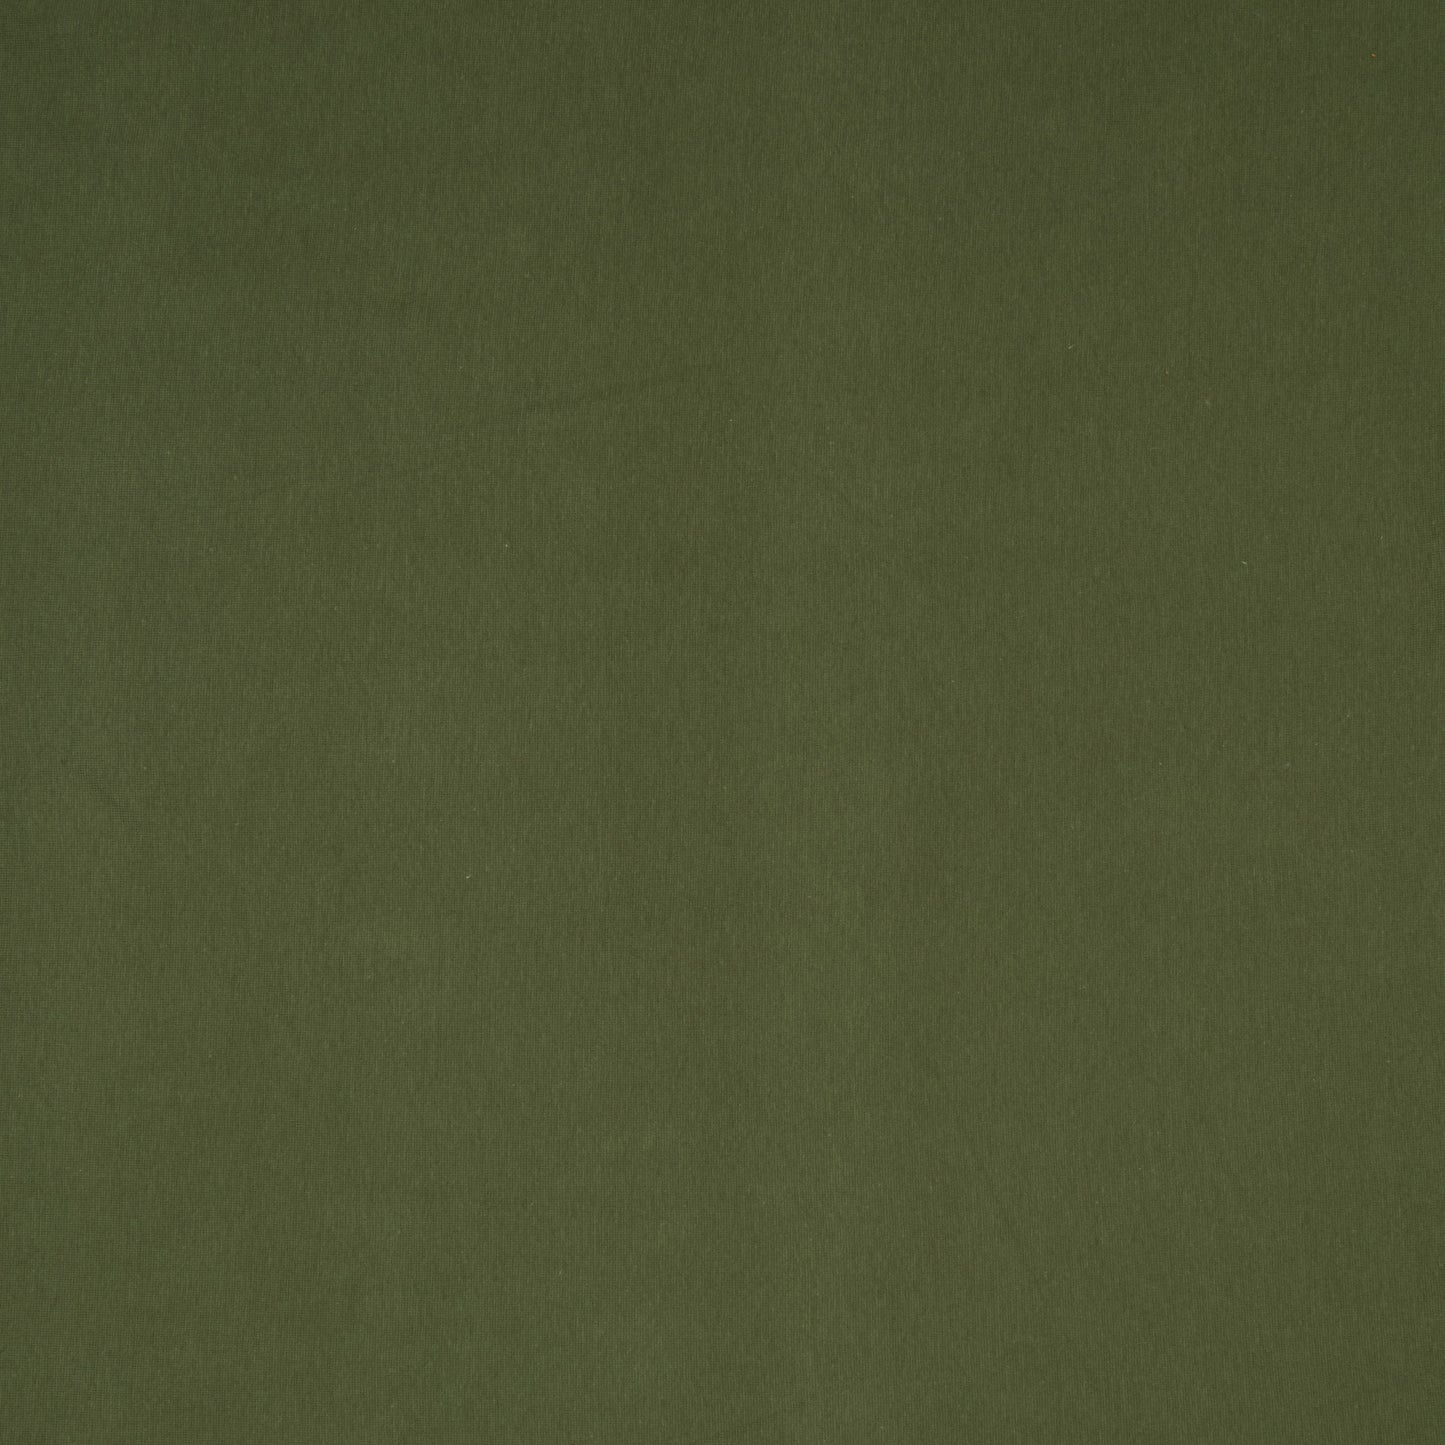 Ribbed Cotton Lycra Knit Olive Green